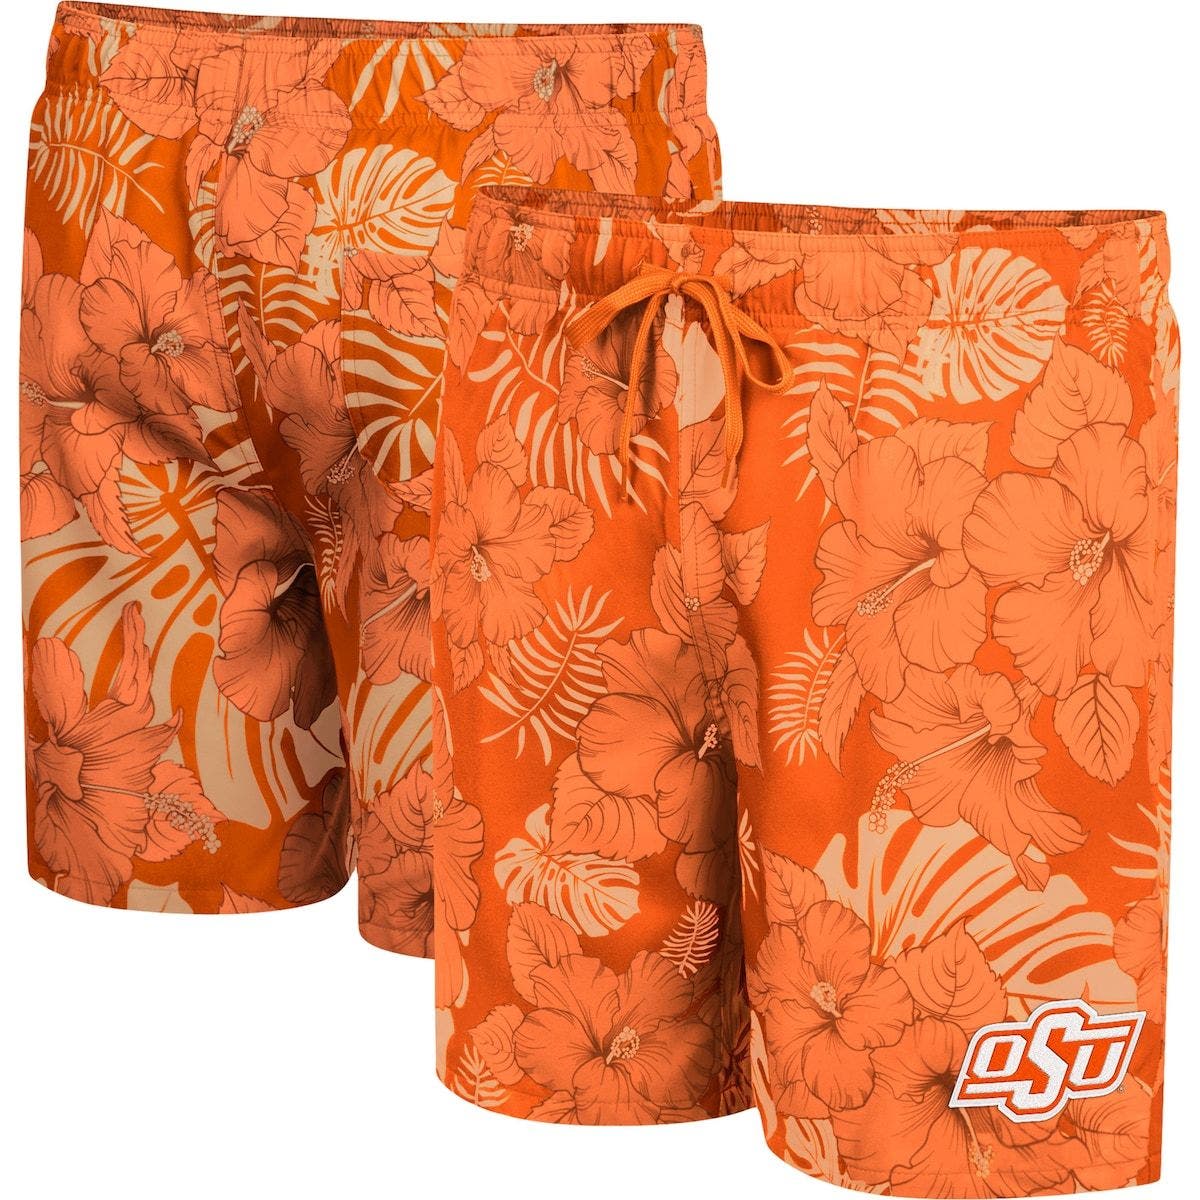 YOIGNG Boardshorts Maple Leaf Mens Quick Dry Swim Trunks Beach Shorts 